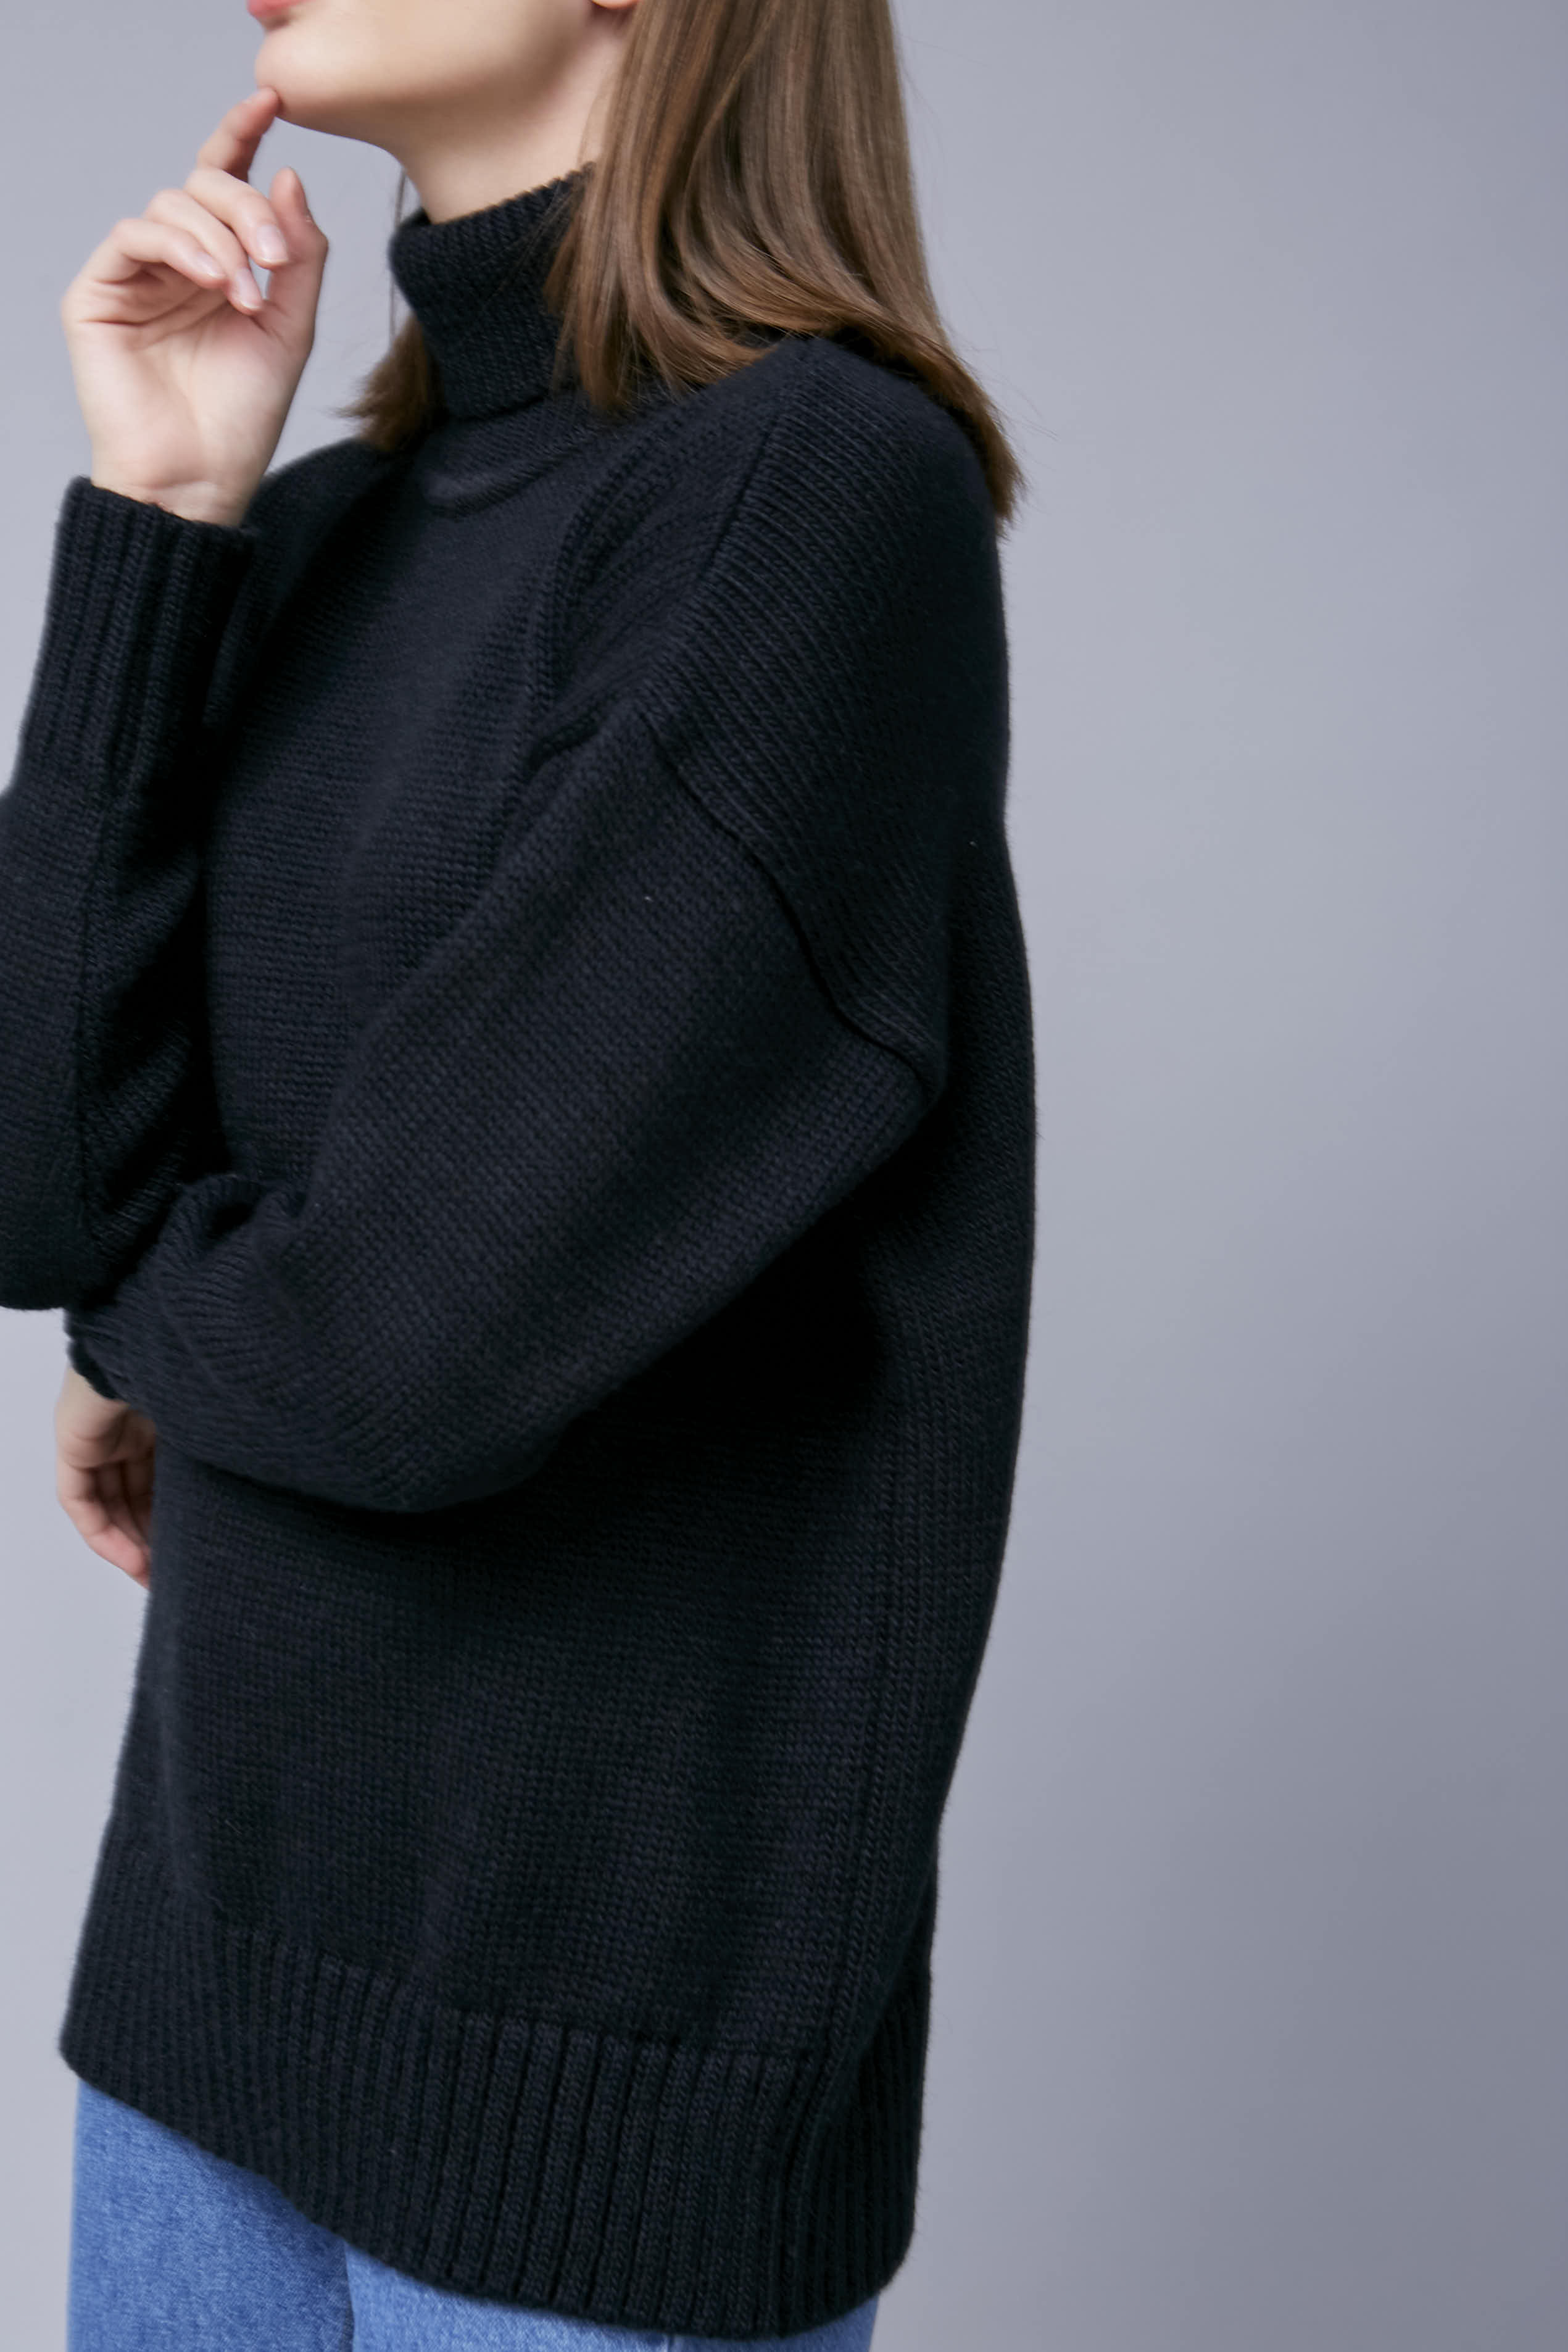 Black knit turtleneck sweater, photo 4